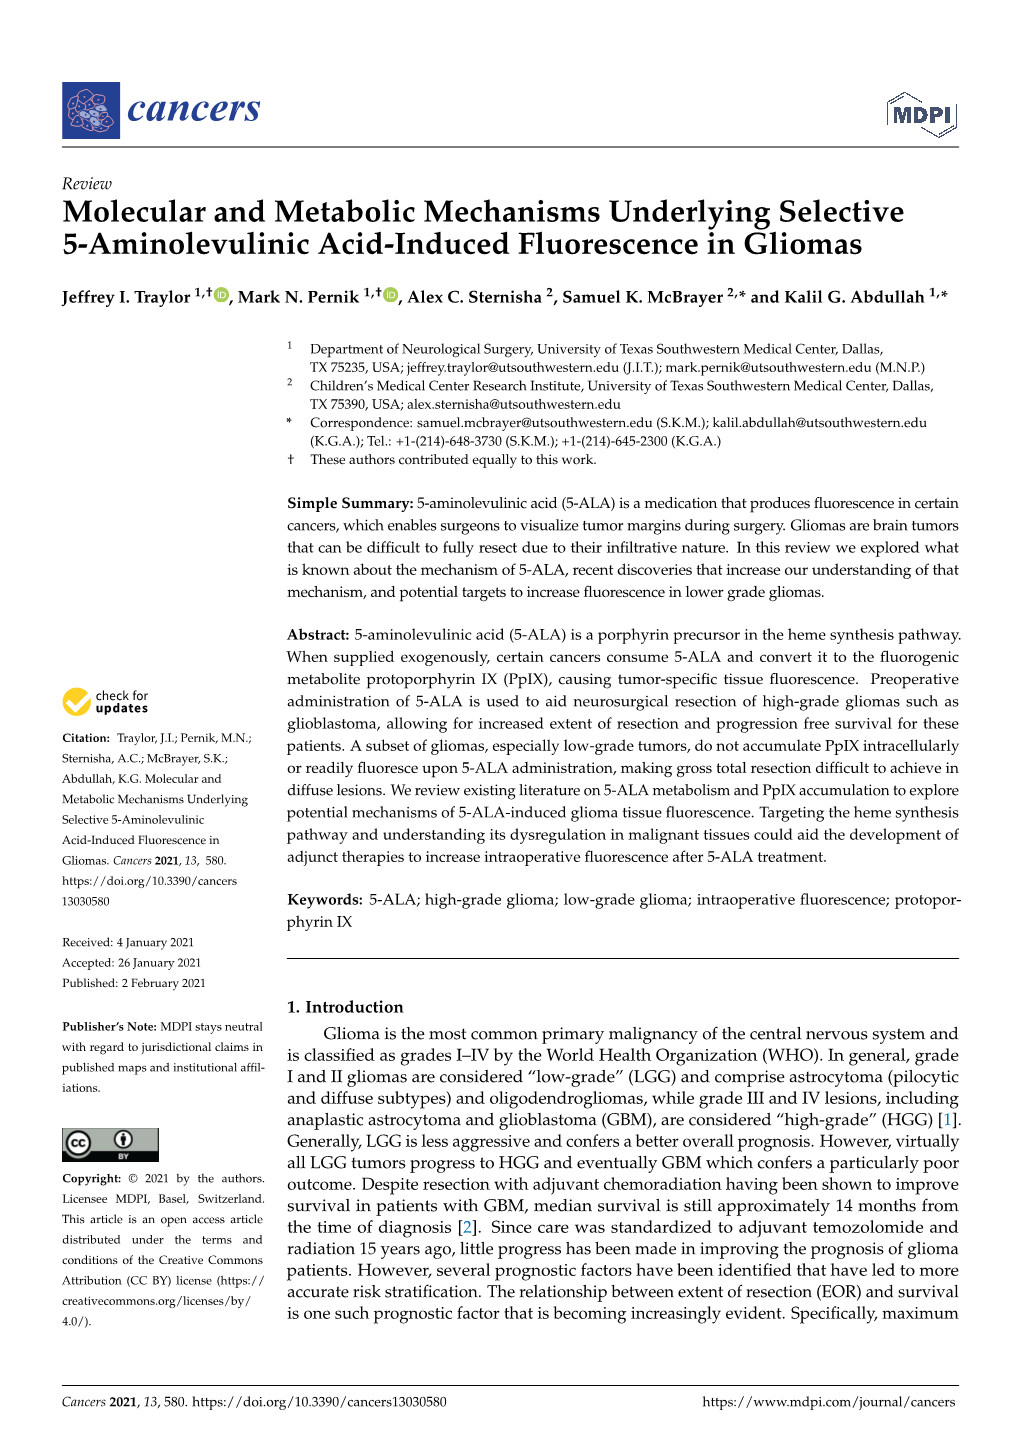 Molecular and Metabolic Mechanisms Underlying Selective 5-Aminolevulinic Acid-Induced Fluorescence in Gliomas